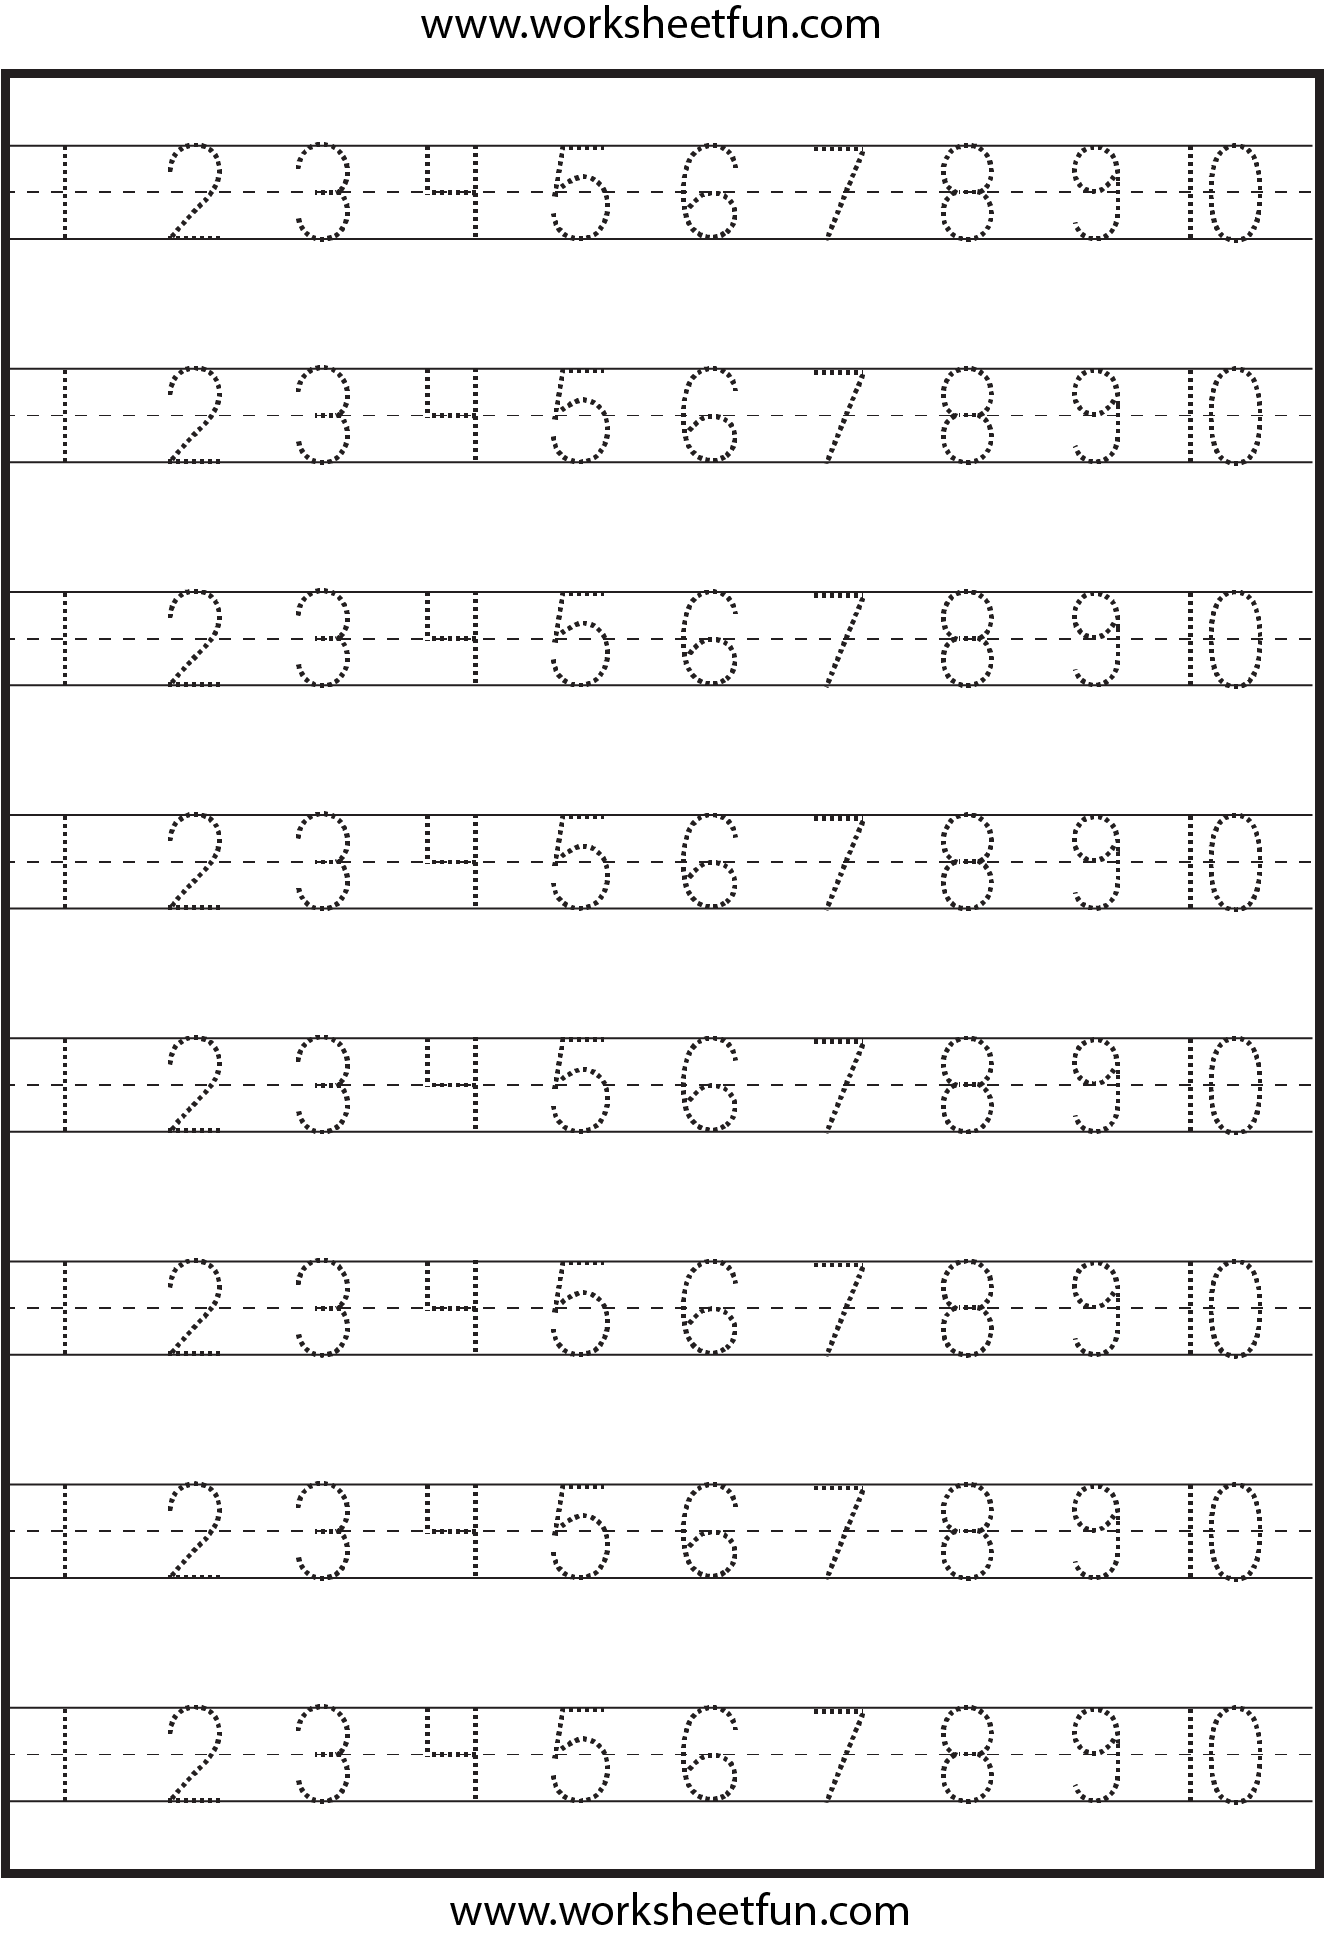 tracing-numbers-1-10-free-printable